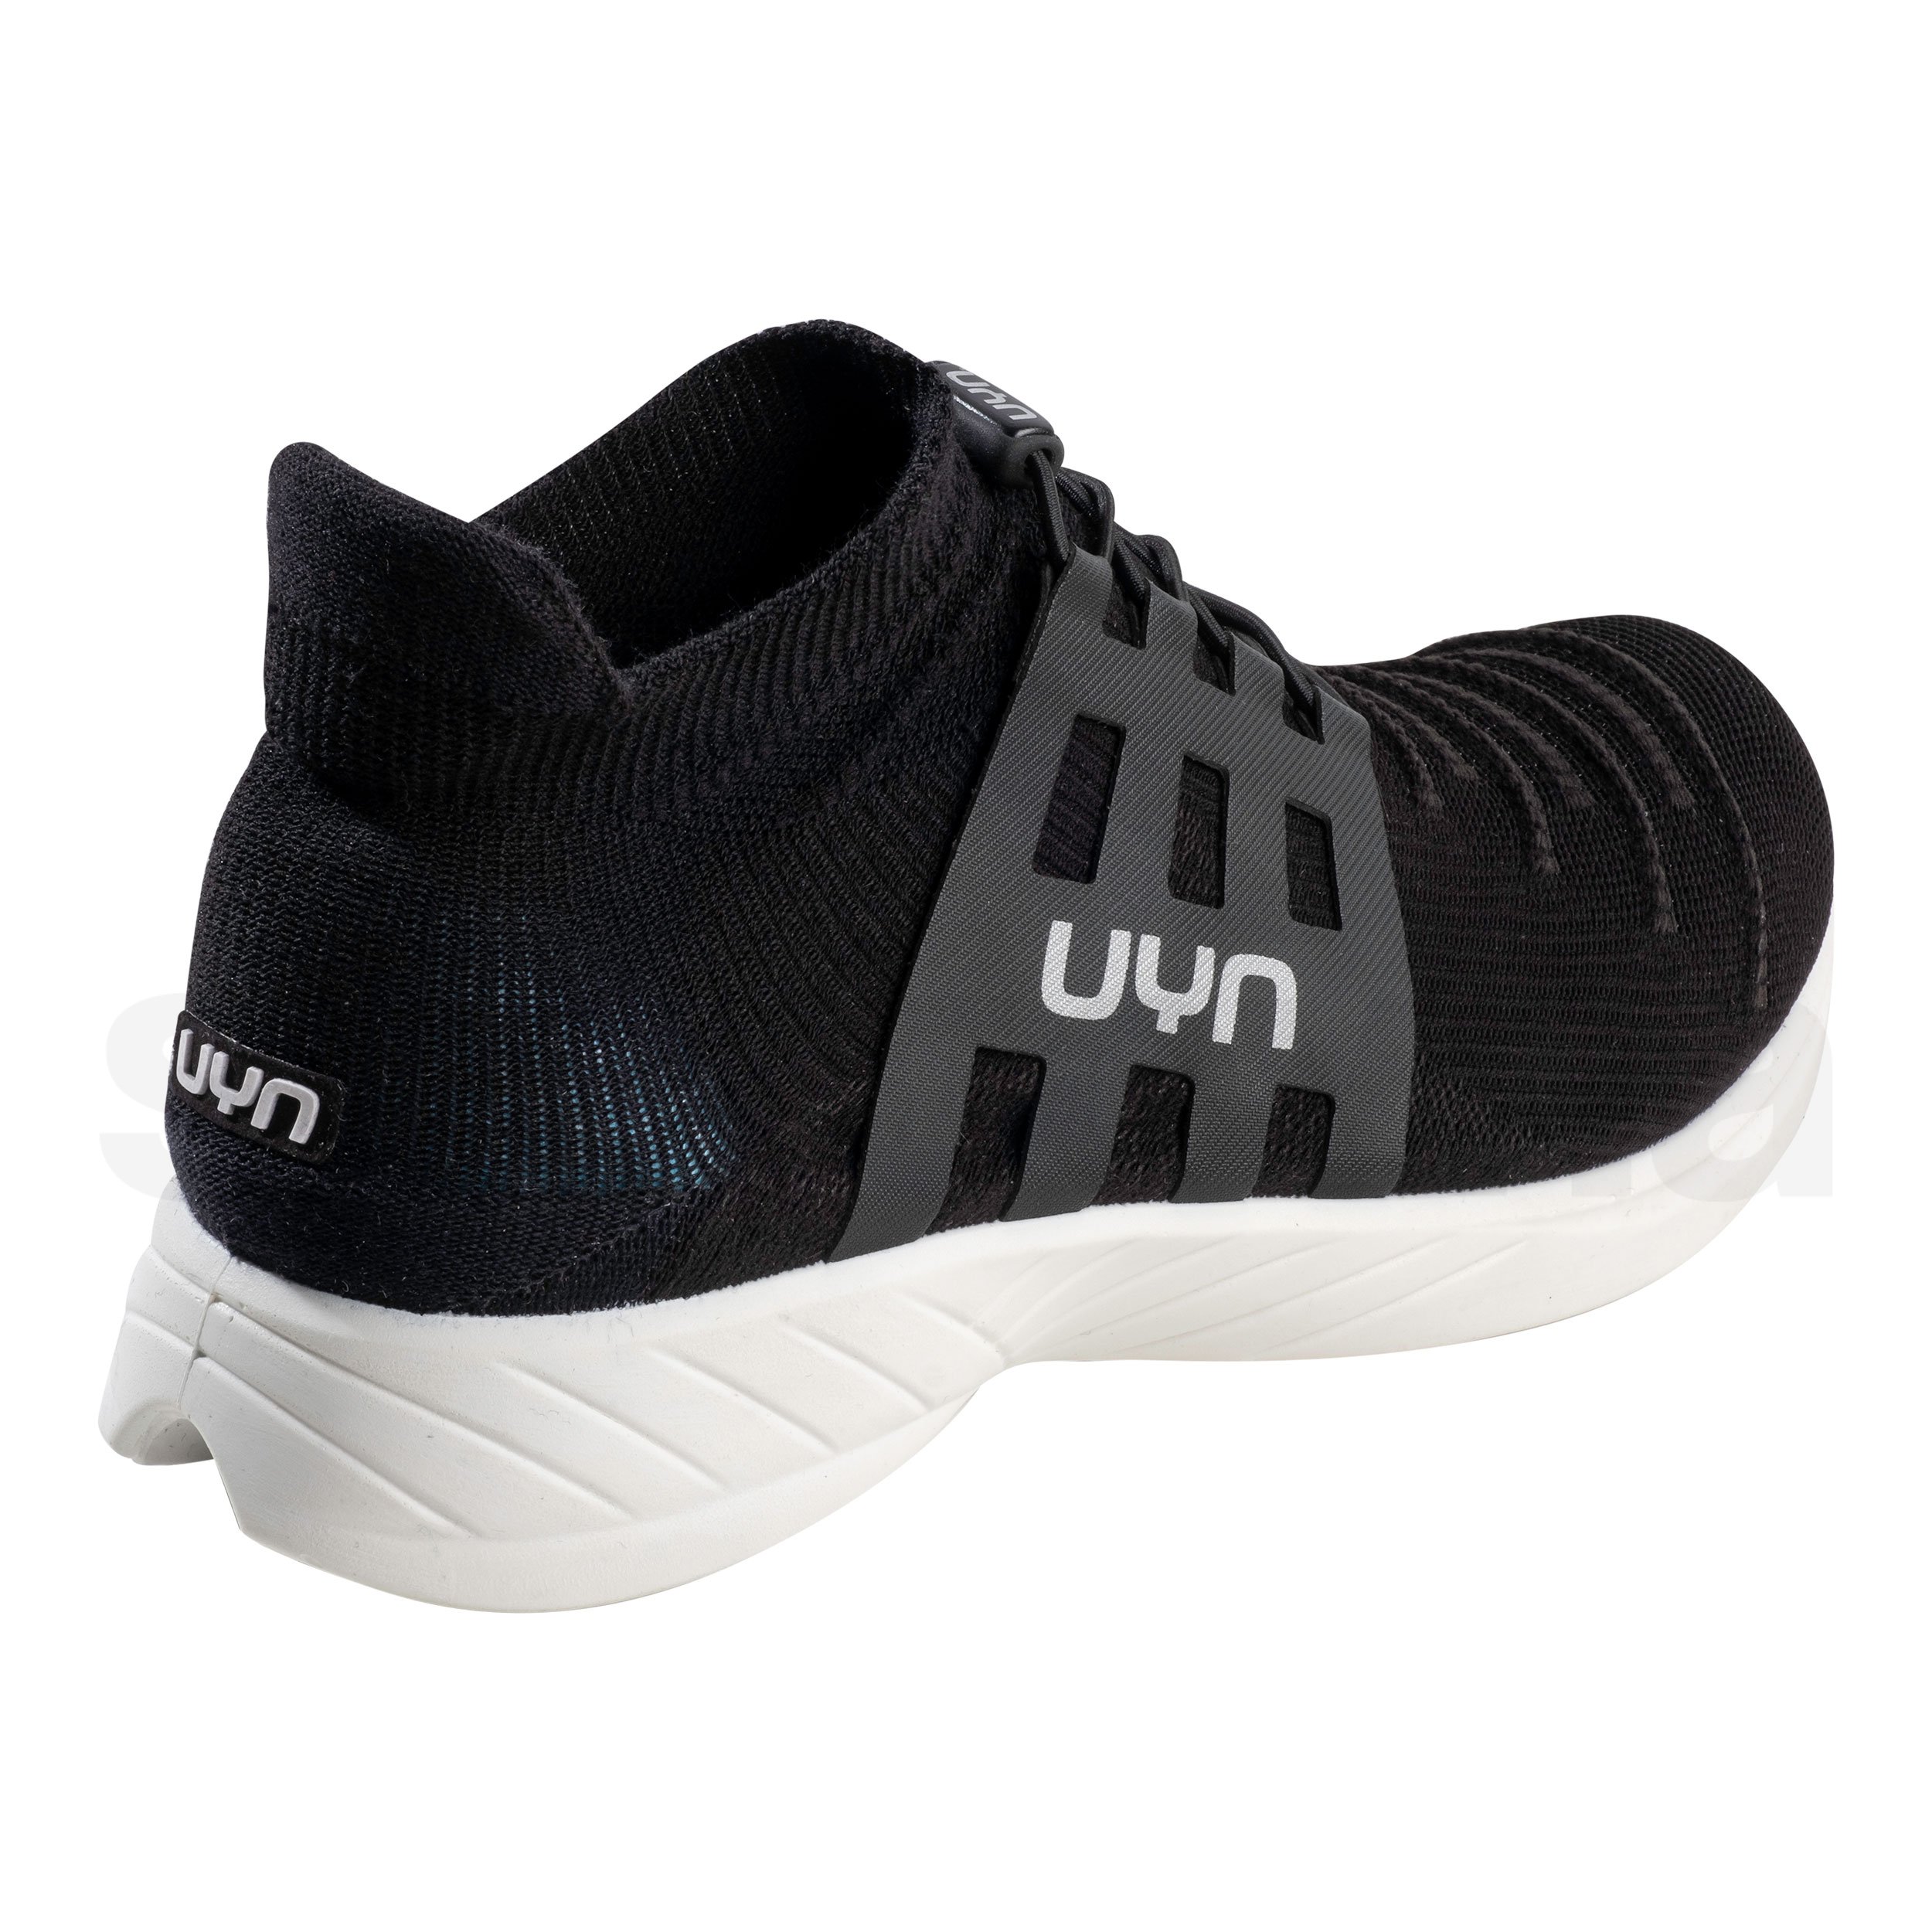 Obuv UYN x-cross tune shoes - černá/bílá